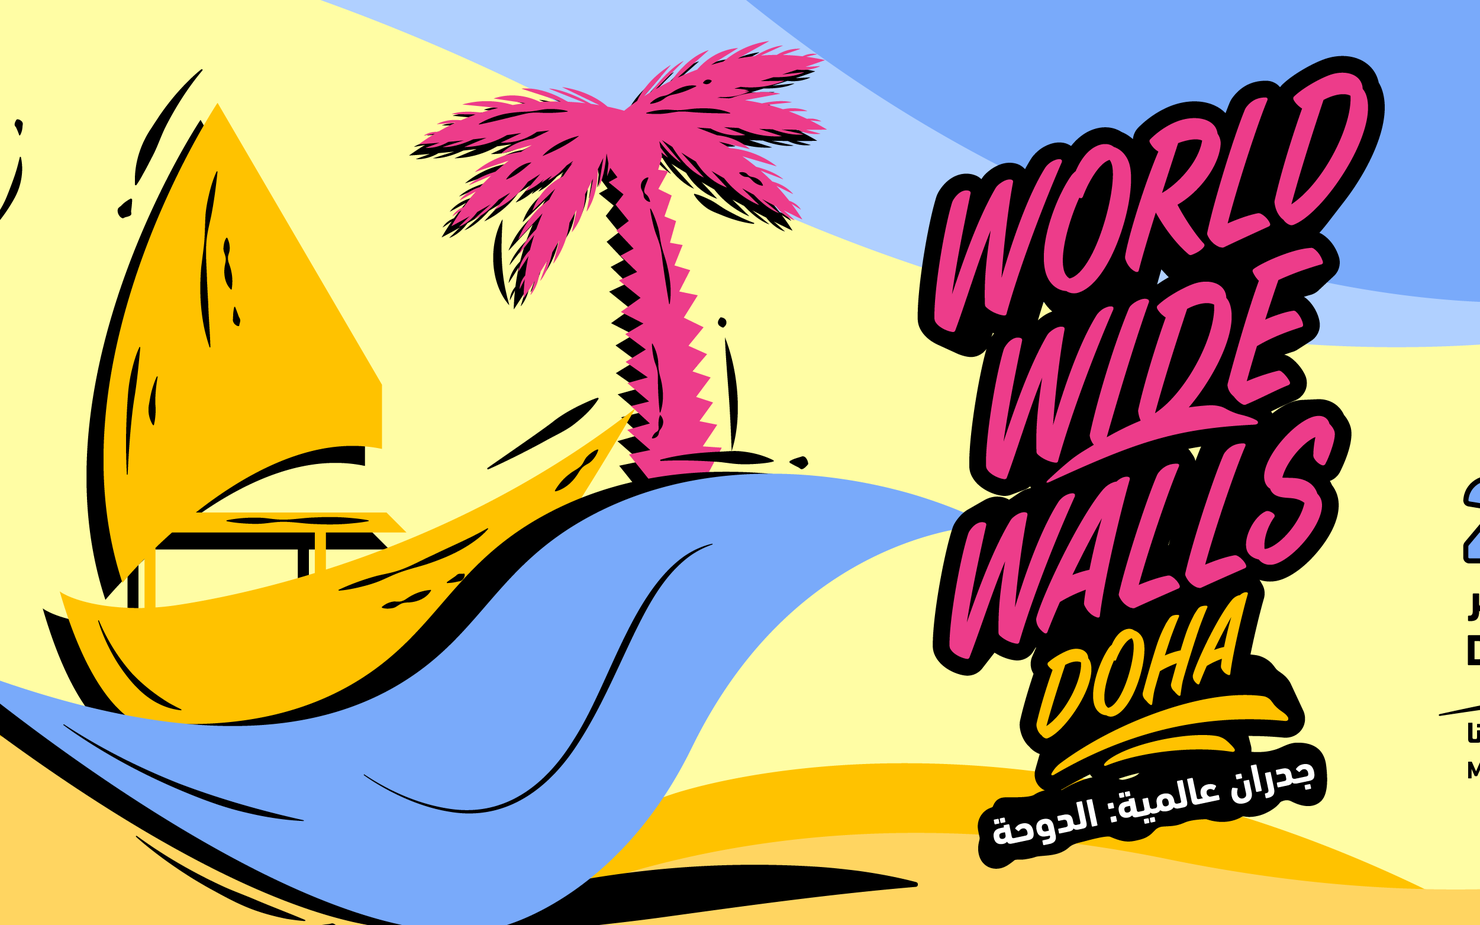 Doha - Qatar Museums Wide Walls: World